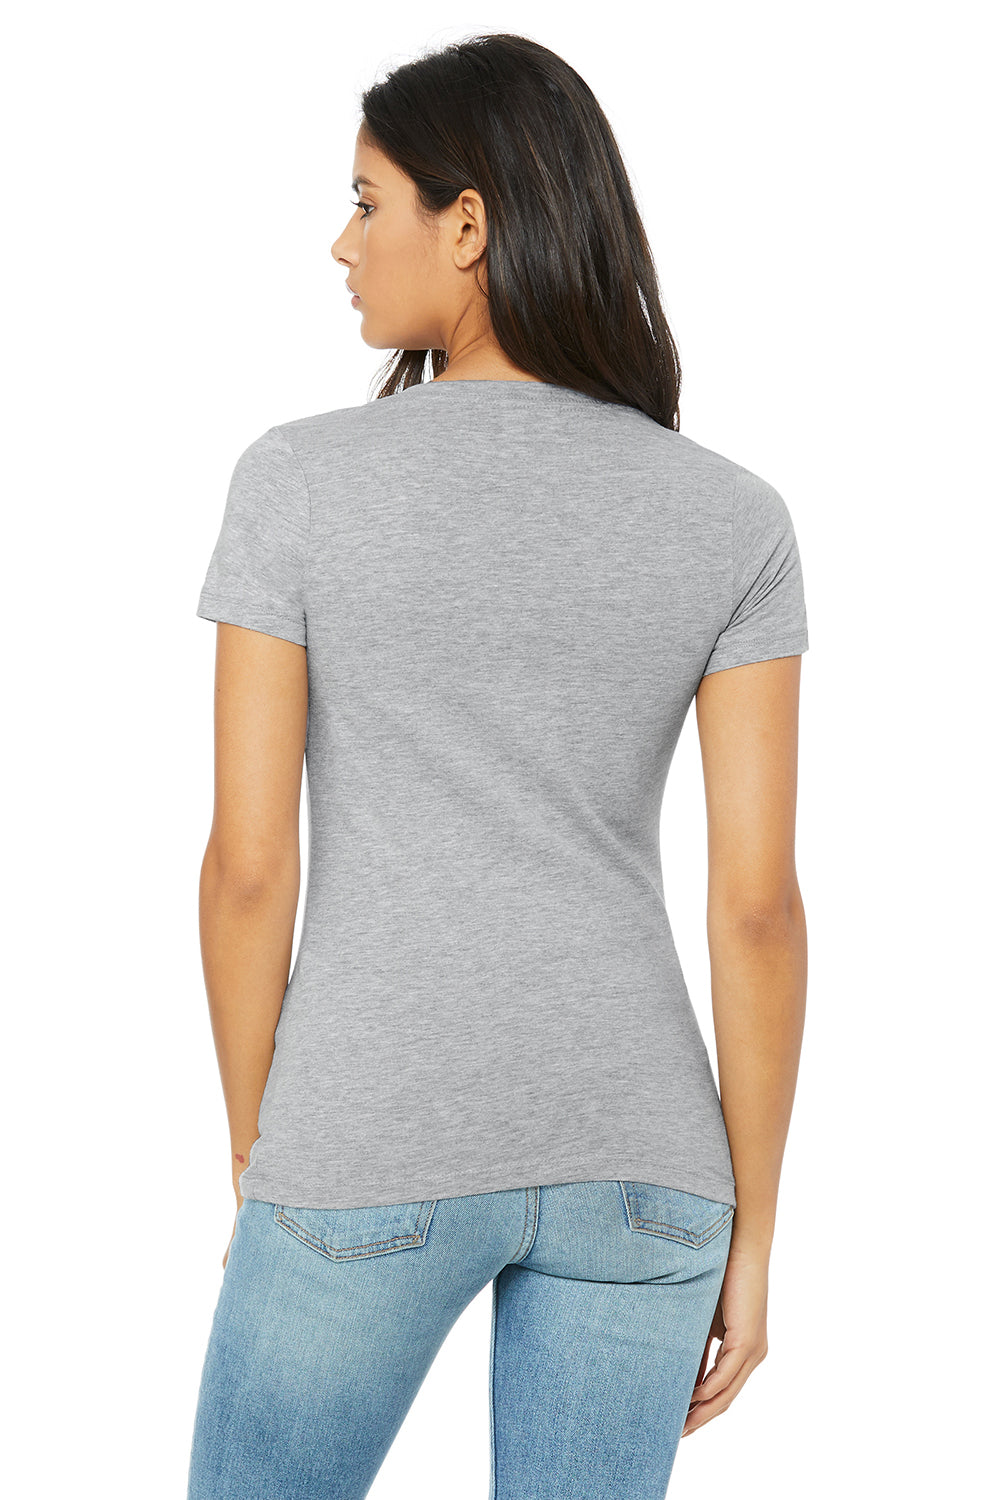 Bella + Canvas B6035 Womens Jersey Short Sleeve Deep V-Neck T-Shirt Heather Grey Back